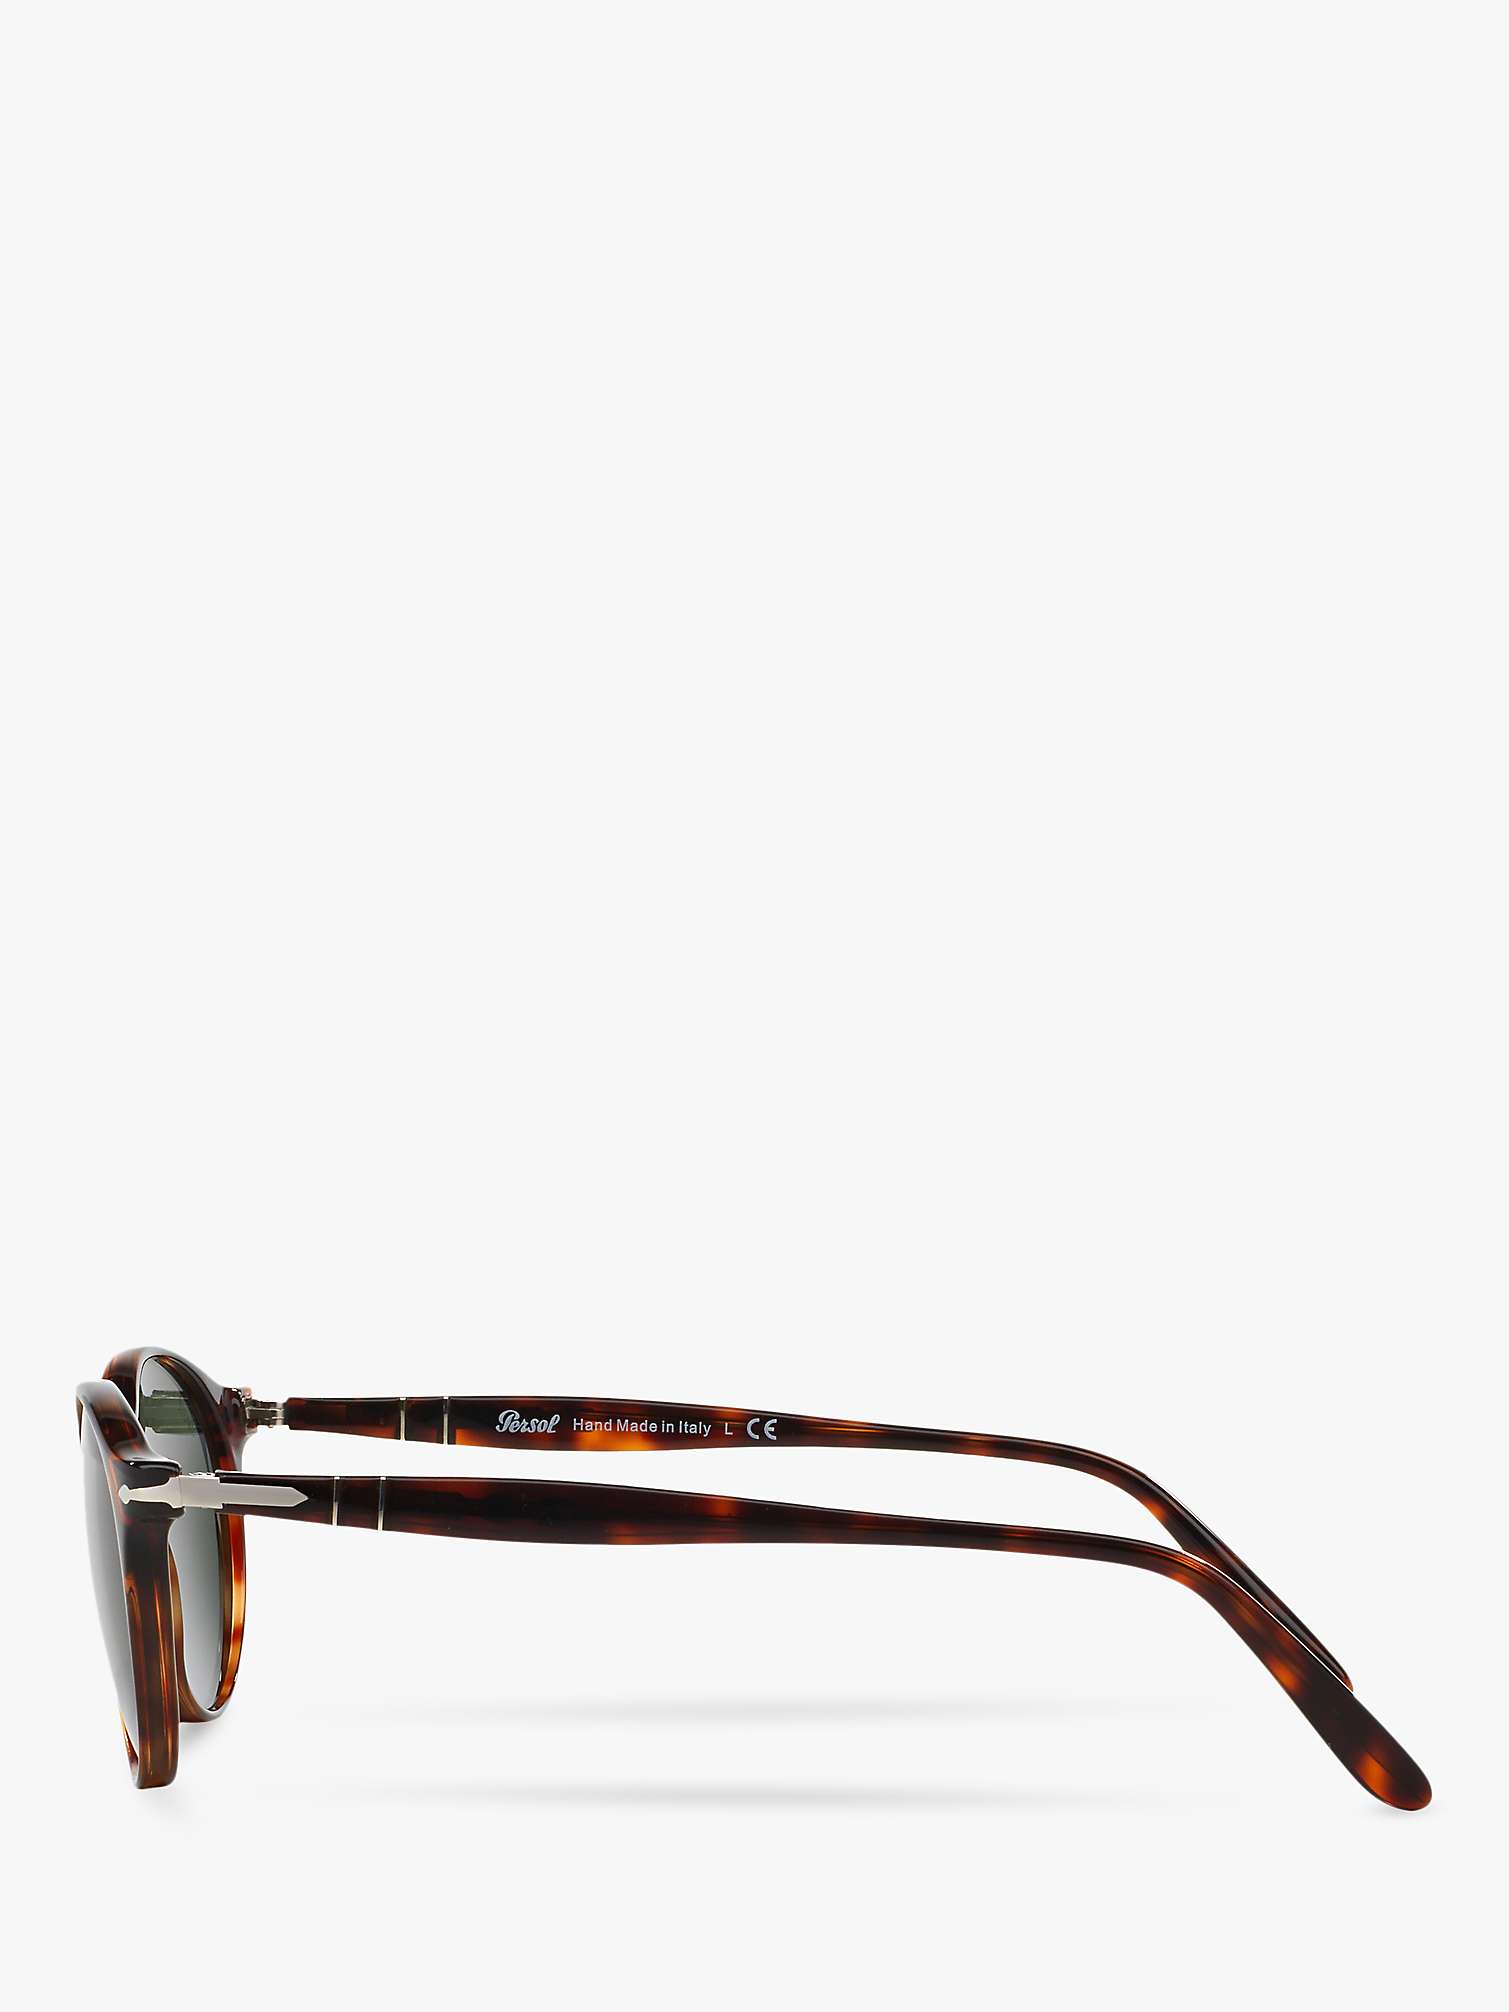 Buy Persol PO3092SM Men's Oval Sunglasses, Tortoise/Green Online at johnlewis.com